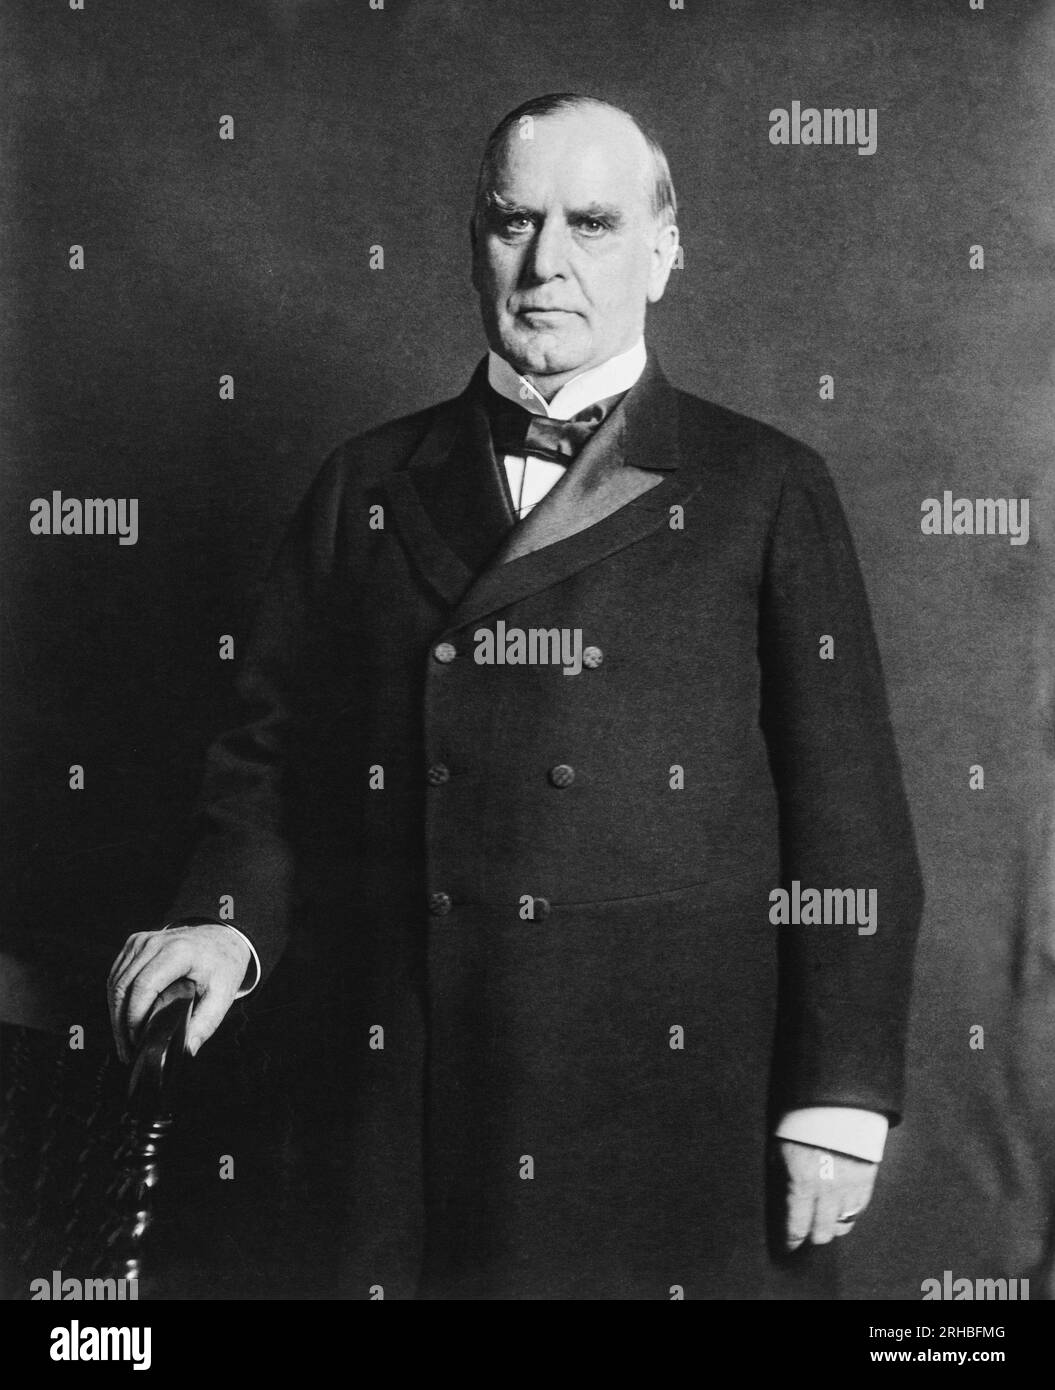 Washington, D.C.:   1900 A portrait of William Mckinley, Jr. the twenty-fifth President of the United States, (1897-1901). Stock Photo